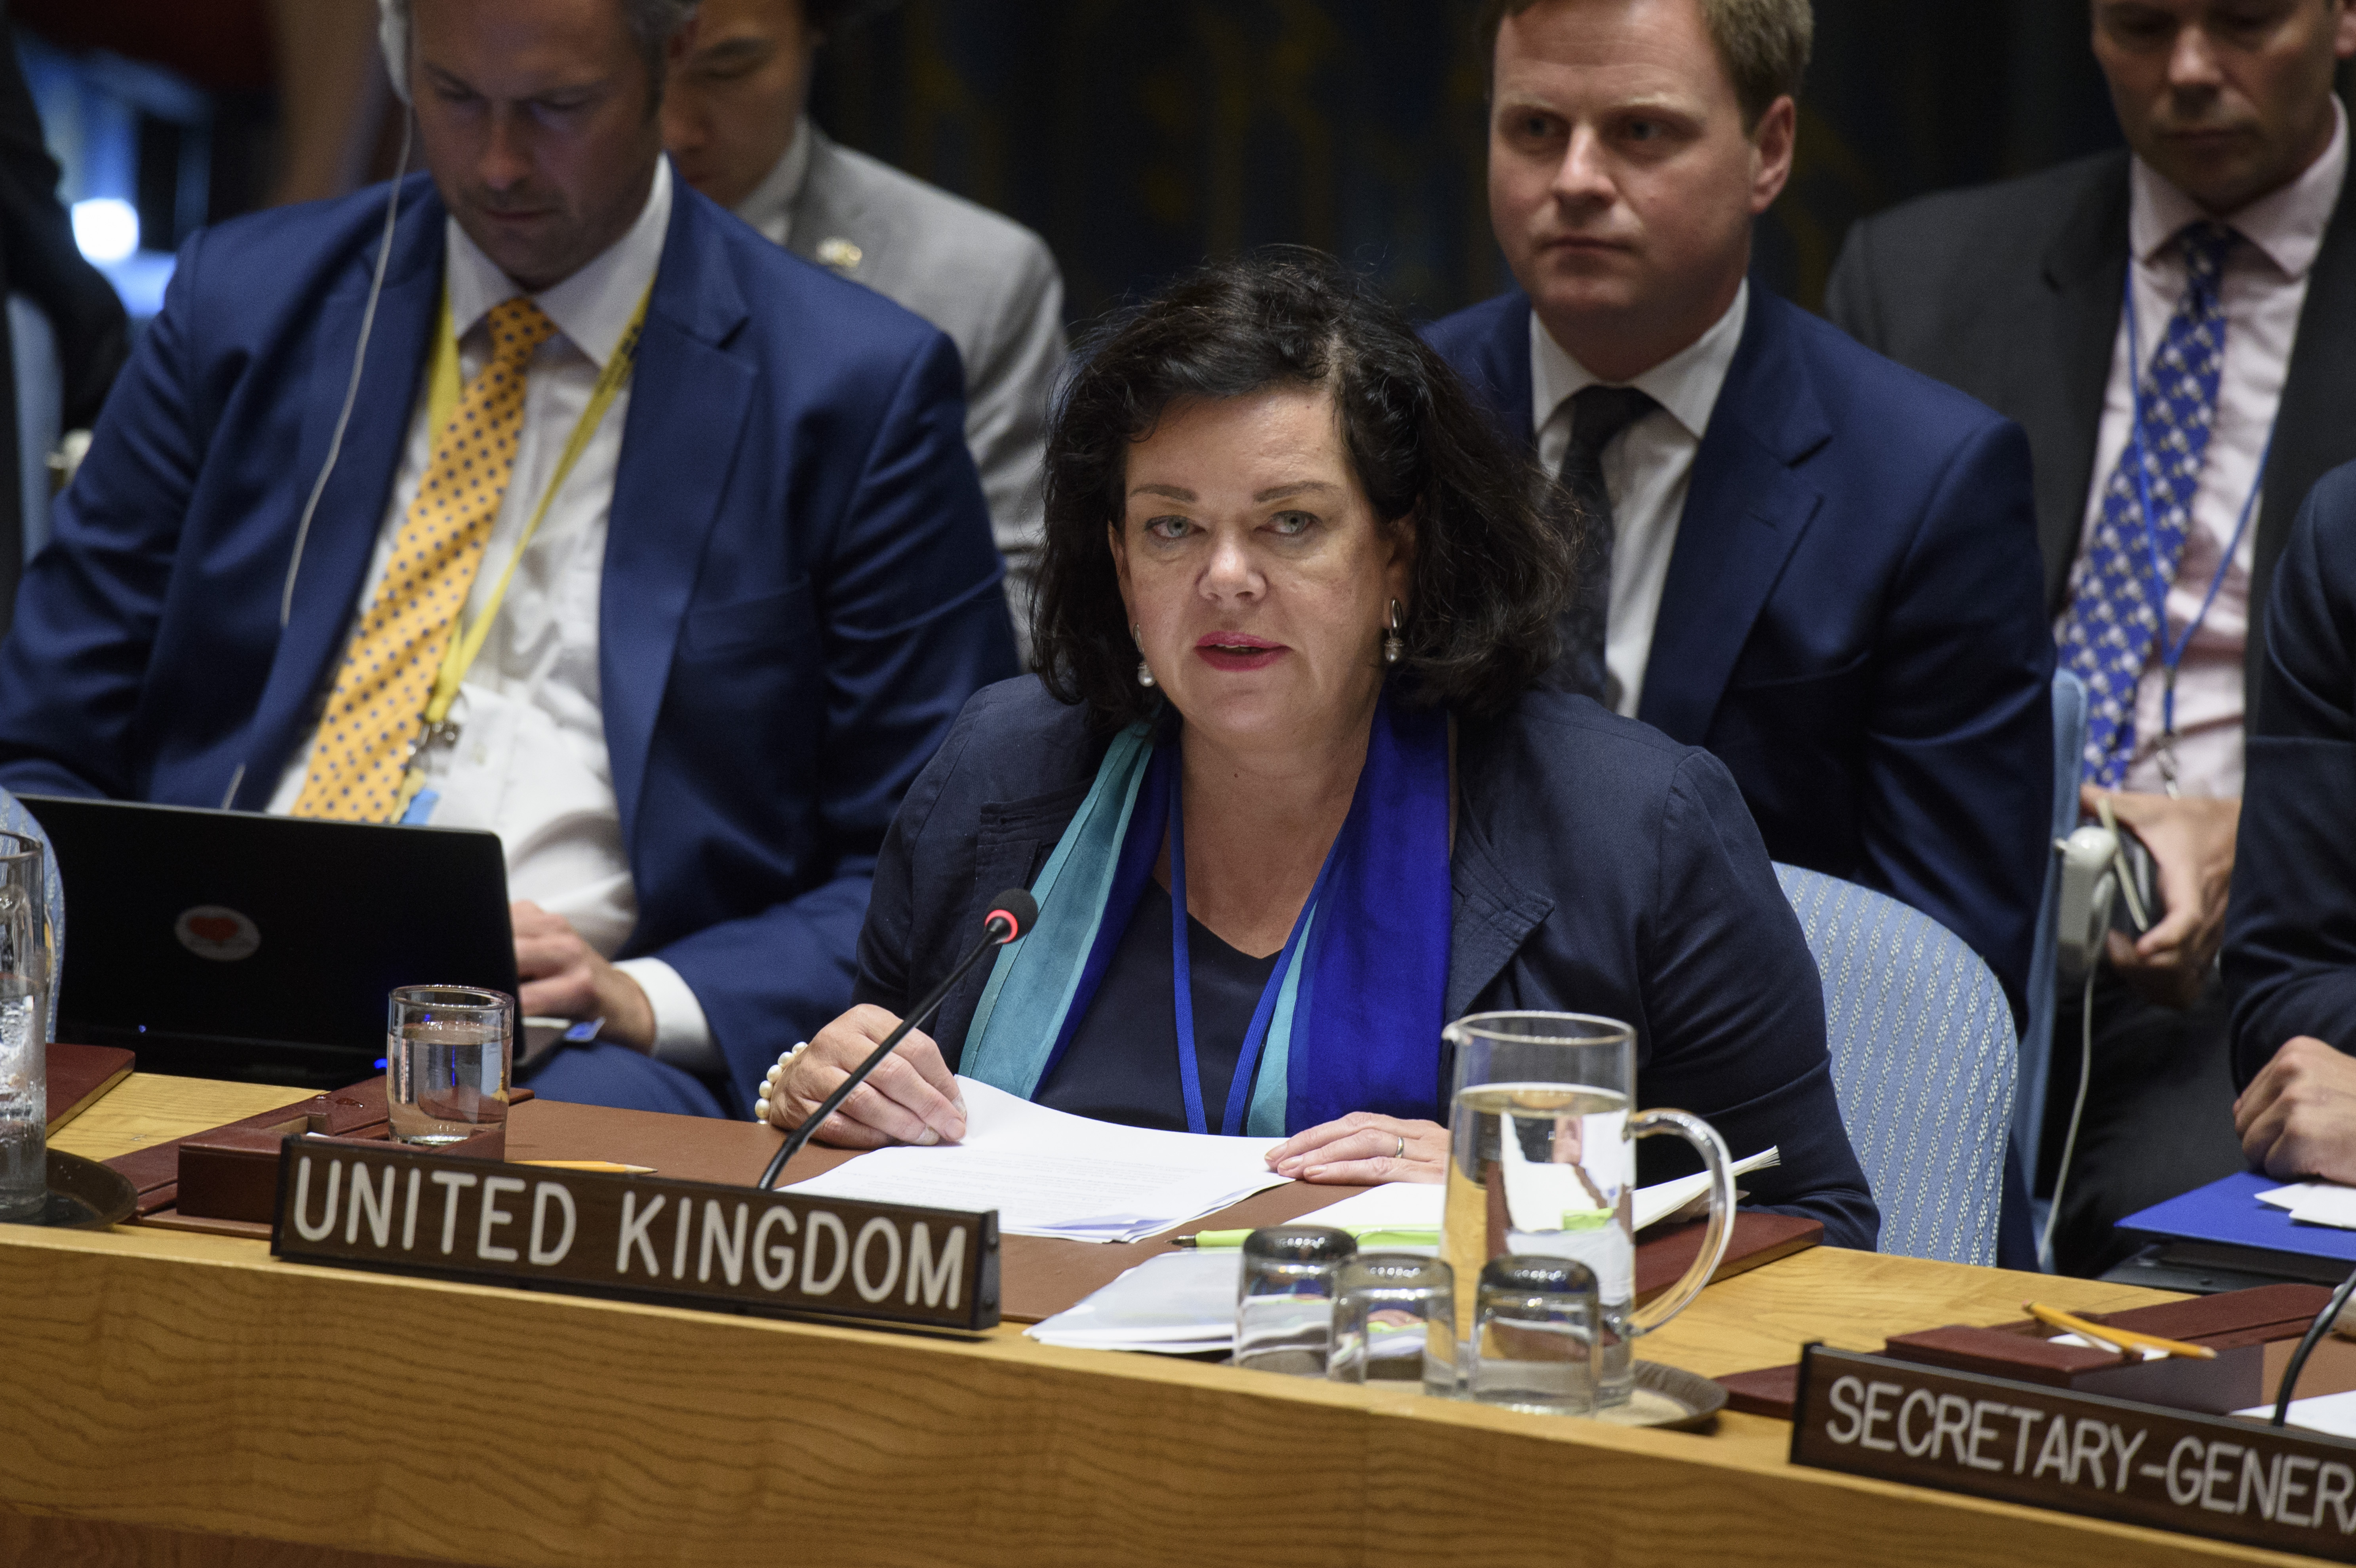 Karen Pierce, Permanent Representative of the United Kingdom to the UN, addresses the Security Council. Credit: UN Photo/Loey Felipe